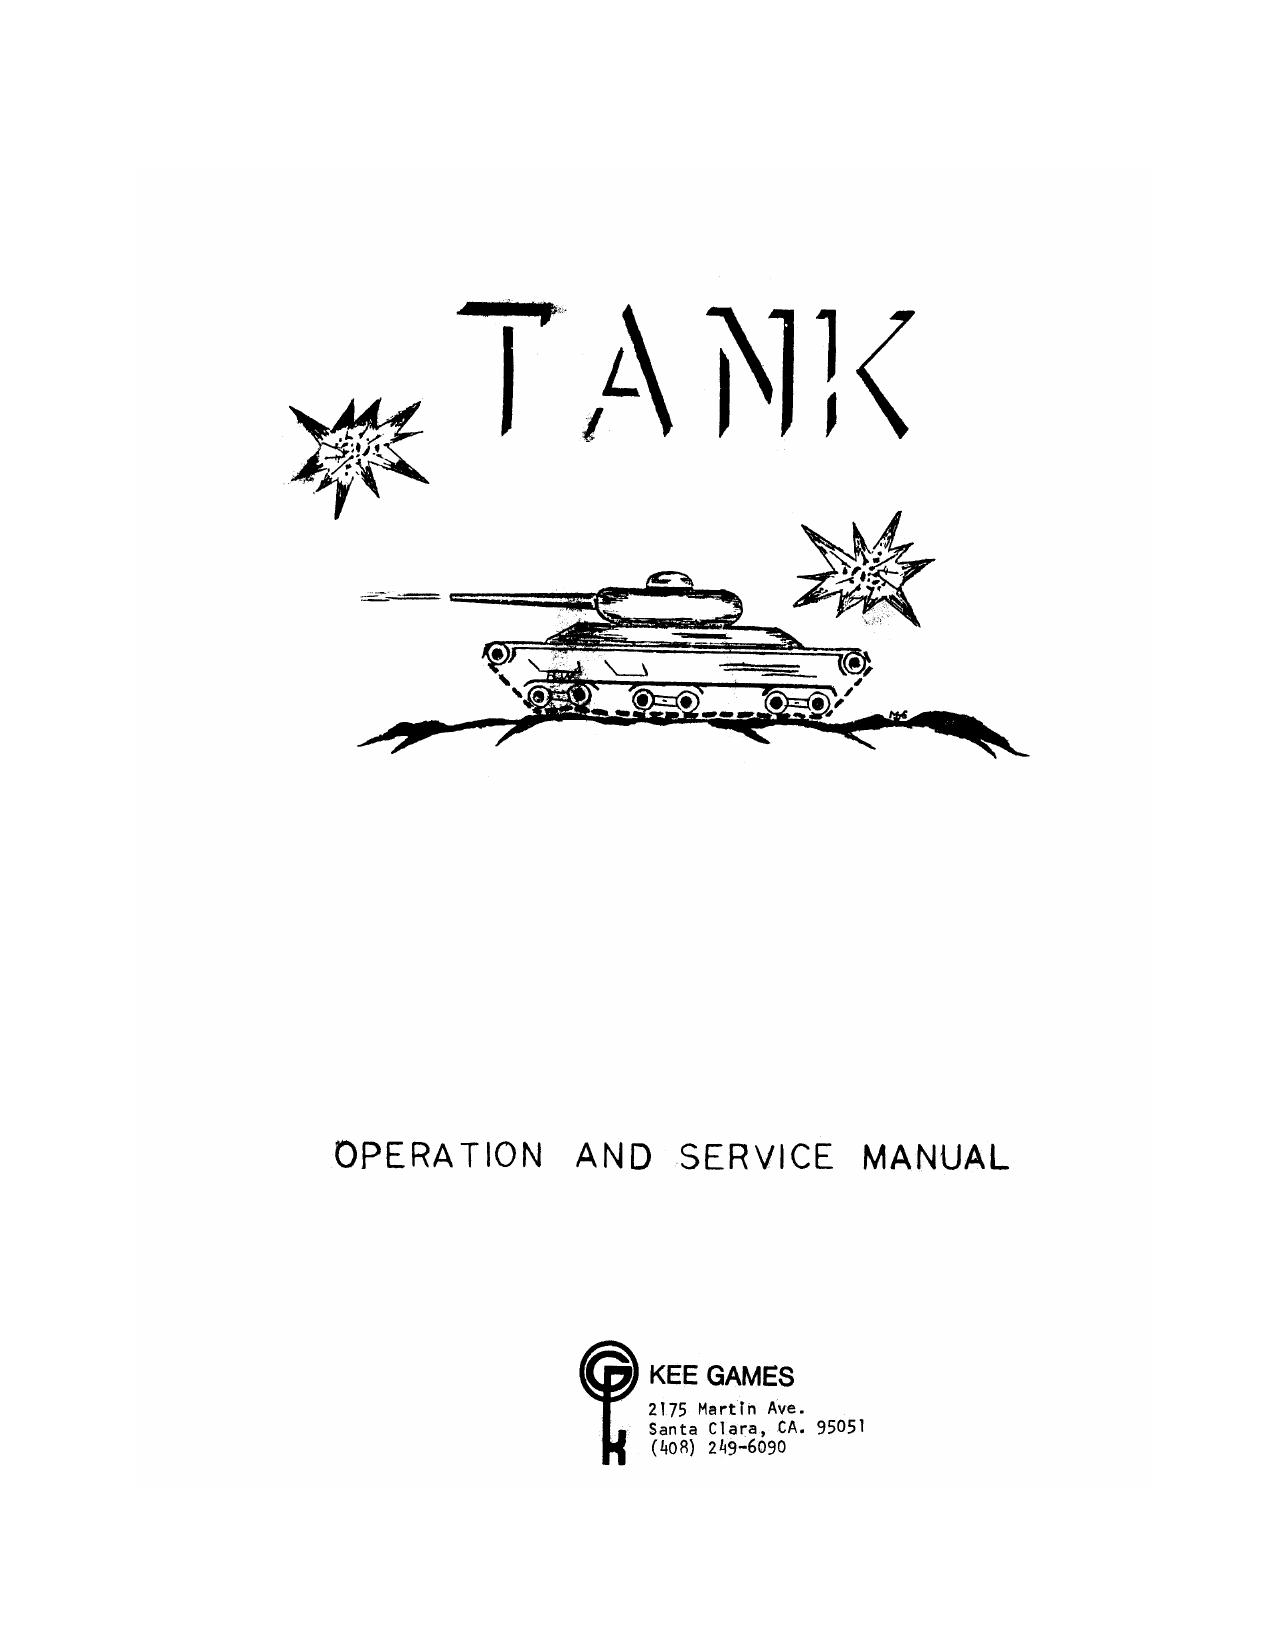 Tank [e]